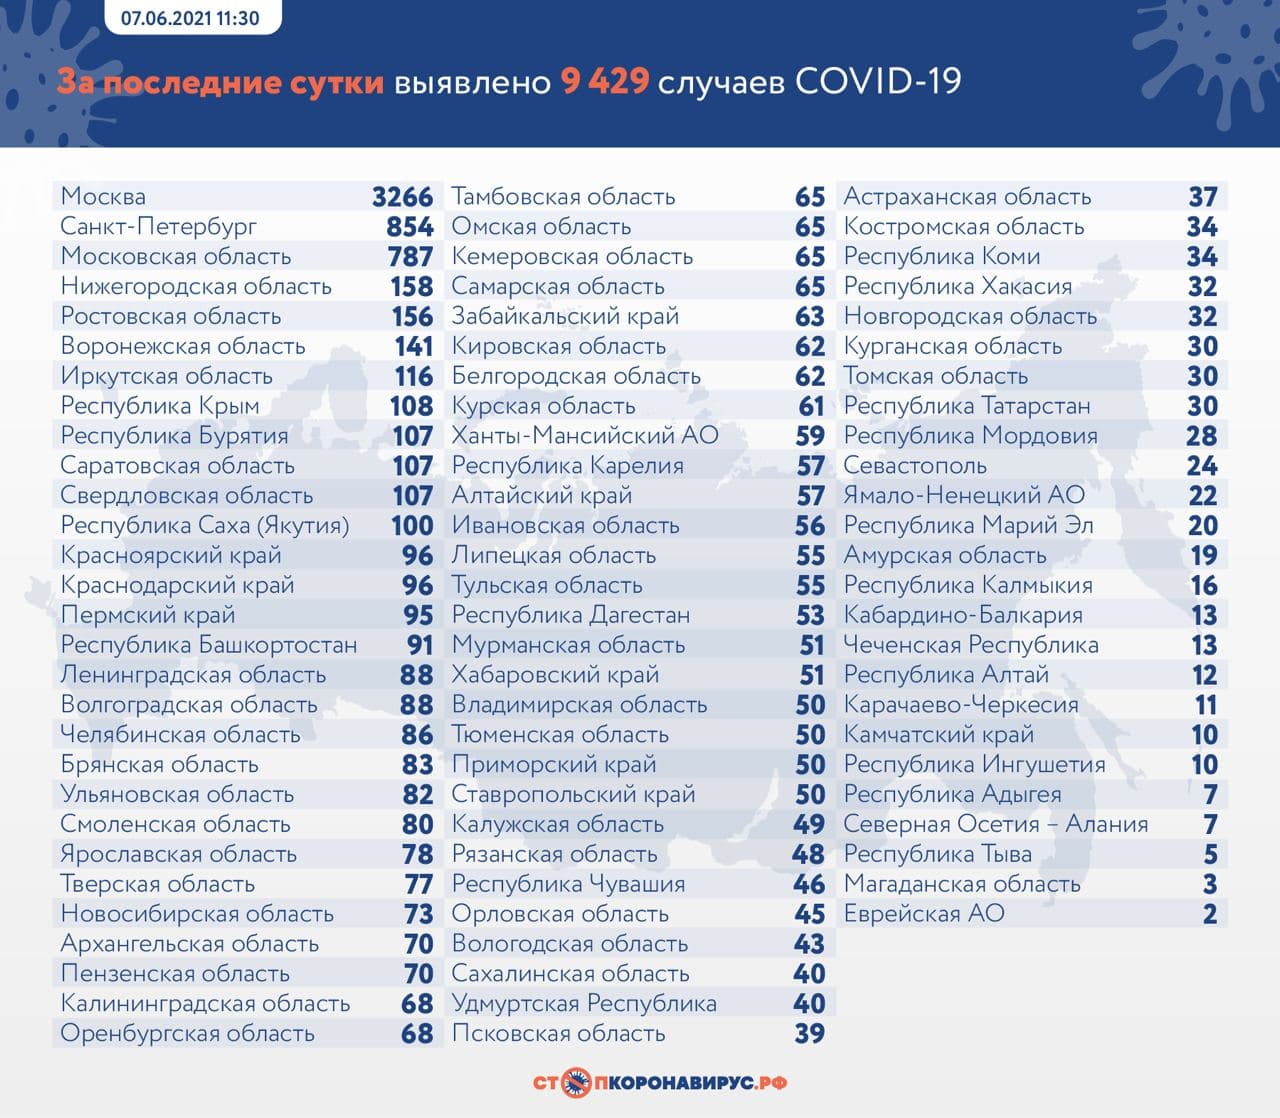 Оперативная статистика по коронавирусу в России на 7 июня